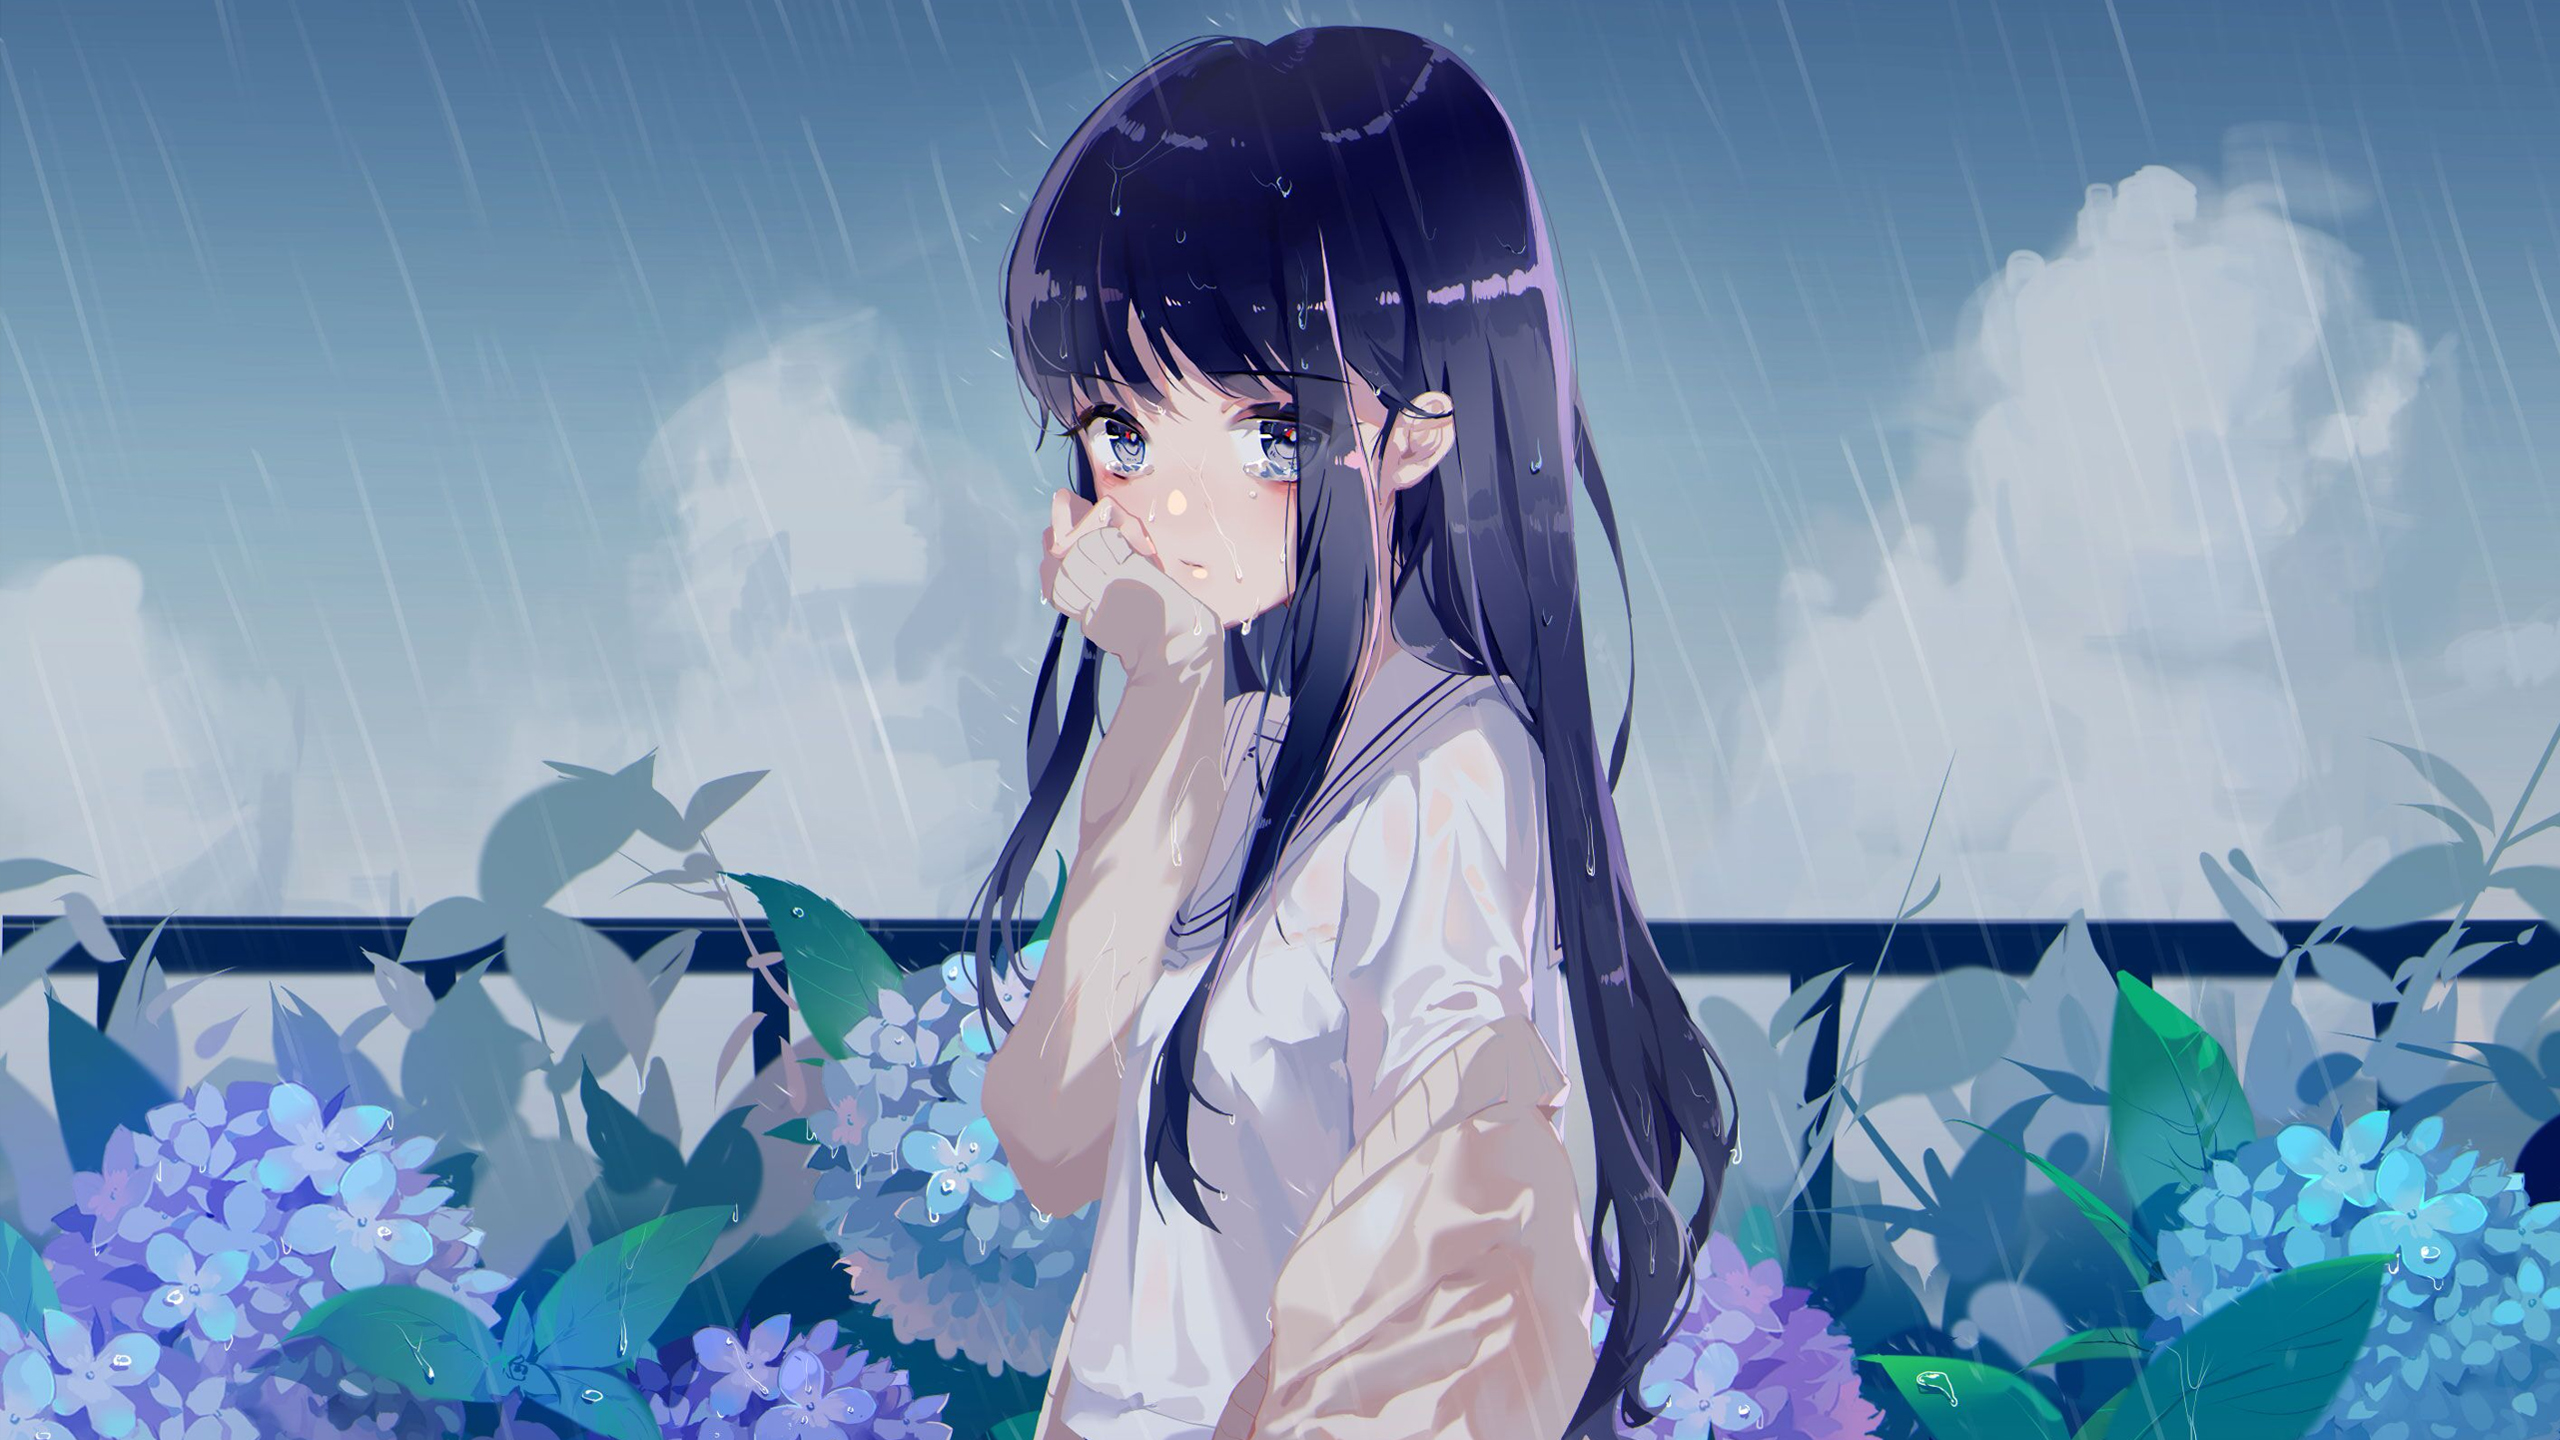 Anime Anime Girls Rain Crying Dark Hair Long Hair Plants Flowers Fence Clouds Sky Blue Eyes Sweater  2560x1440